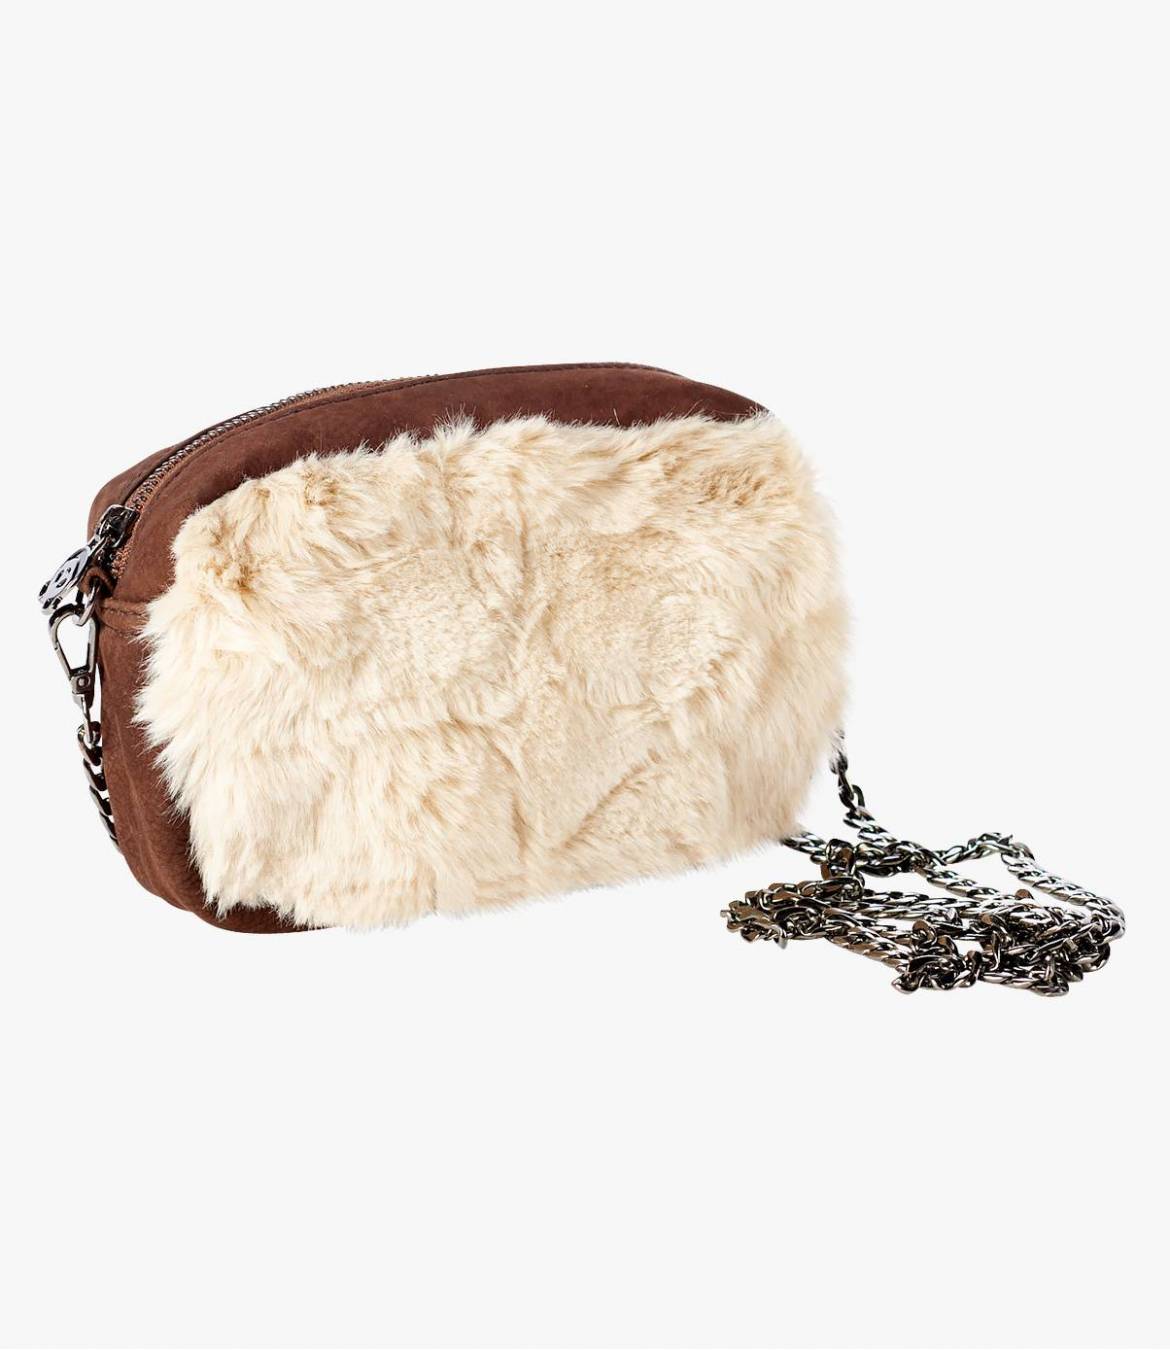 AFI SUEDE Suede Bag, Acrylic, Cotton for Women 22x28 cm Storiatipic - 3